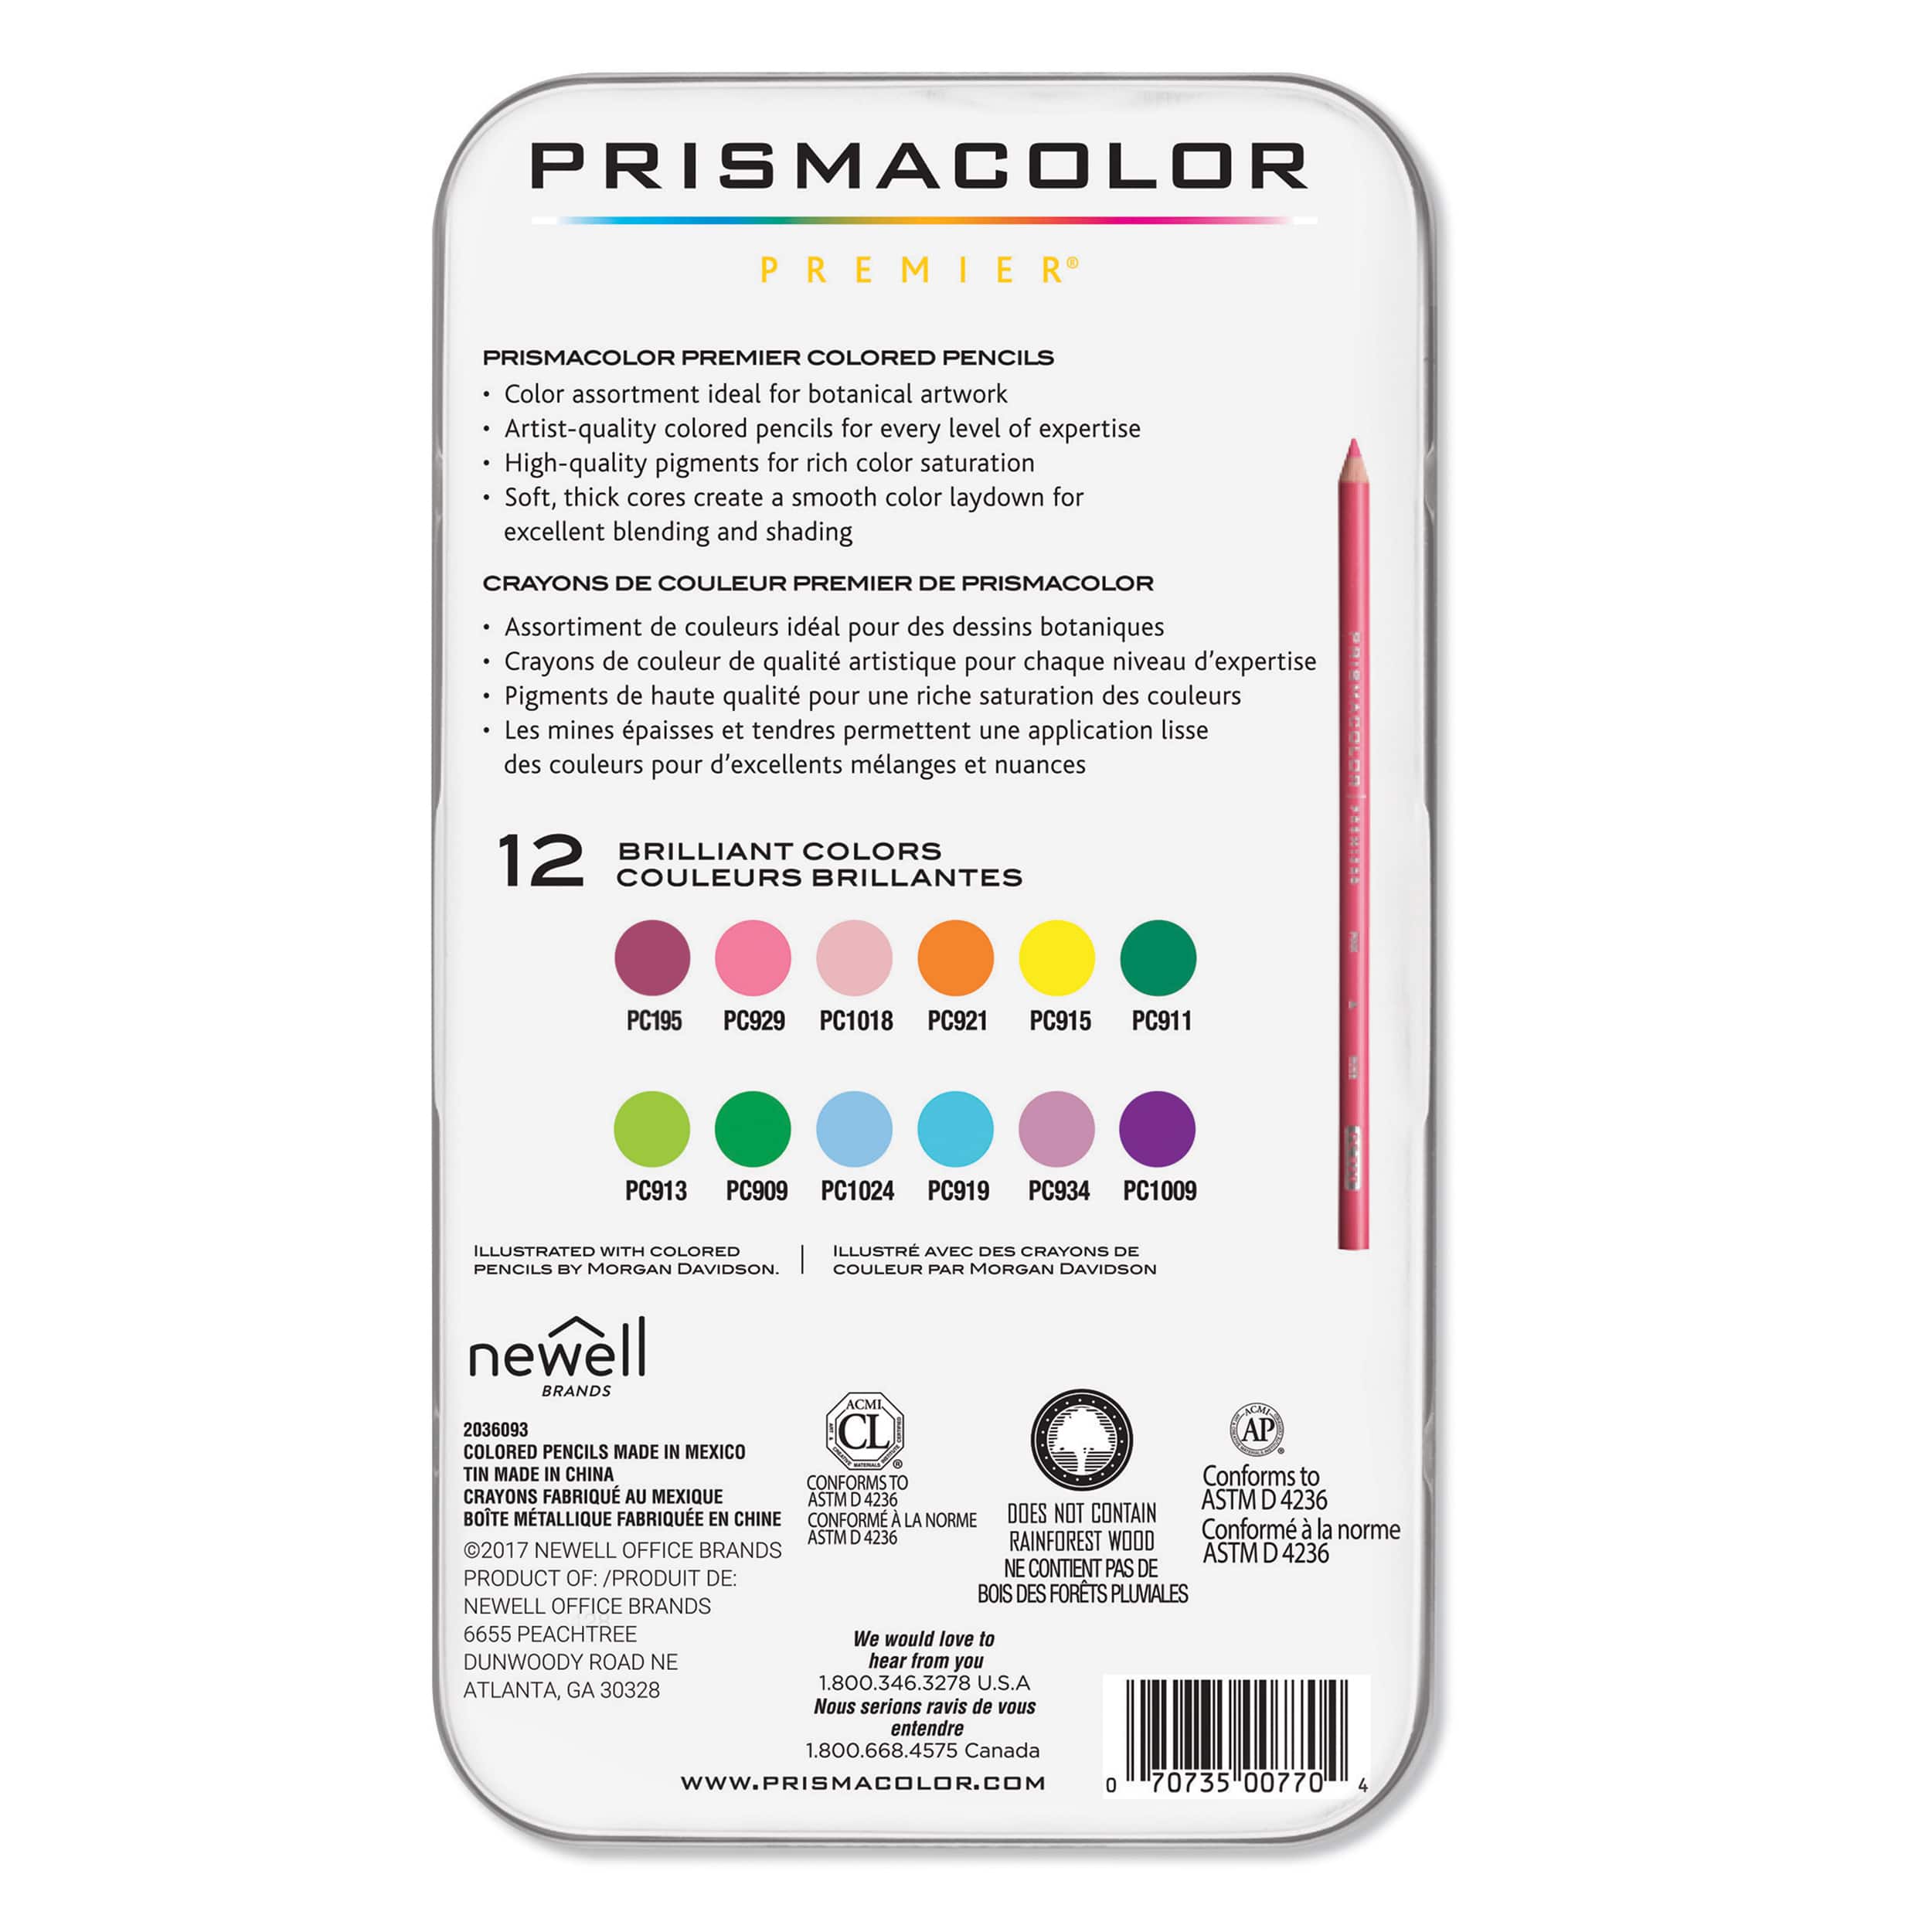 Prismacolor&#xAE; Premier&#xAE; Botanical Garden Colored Pencil Set